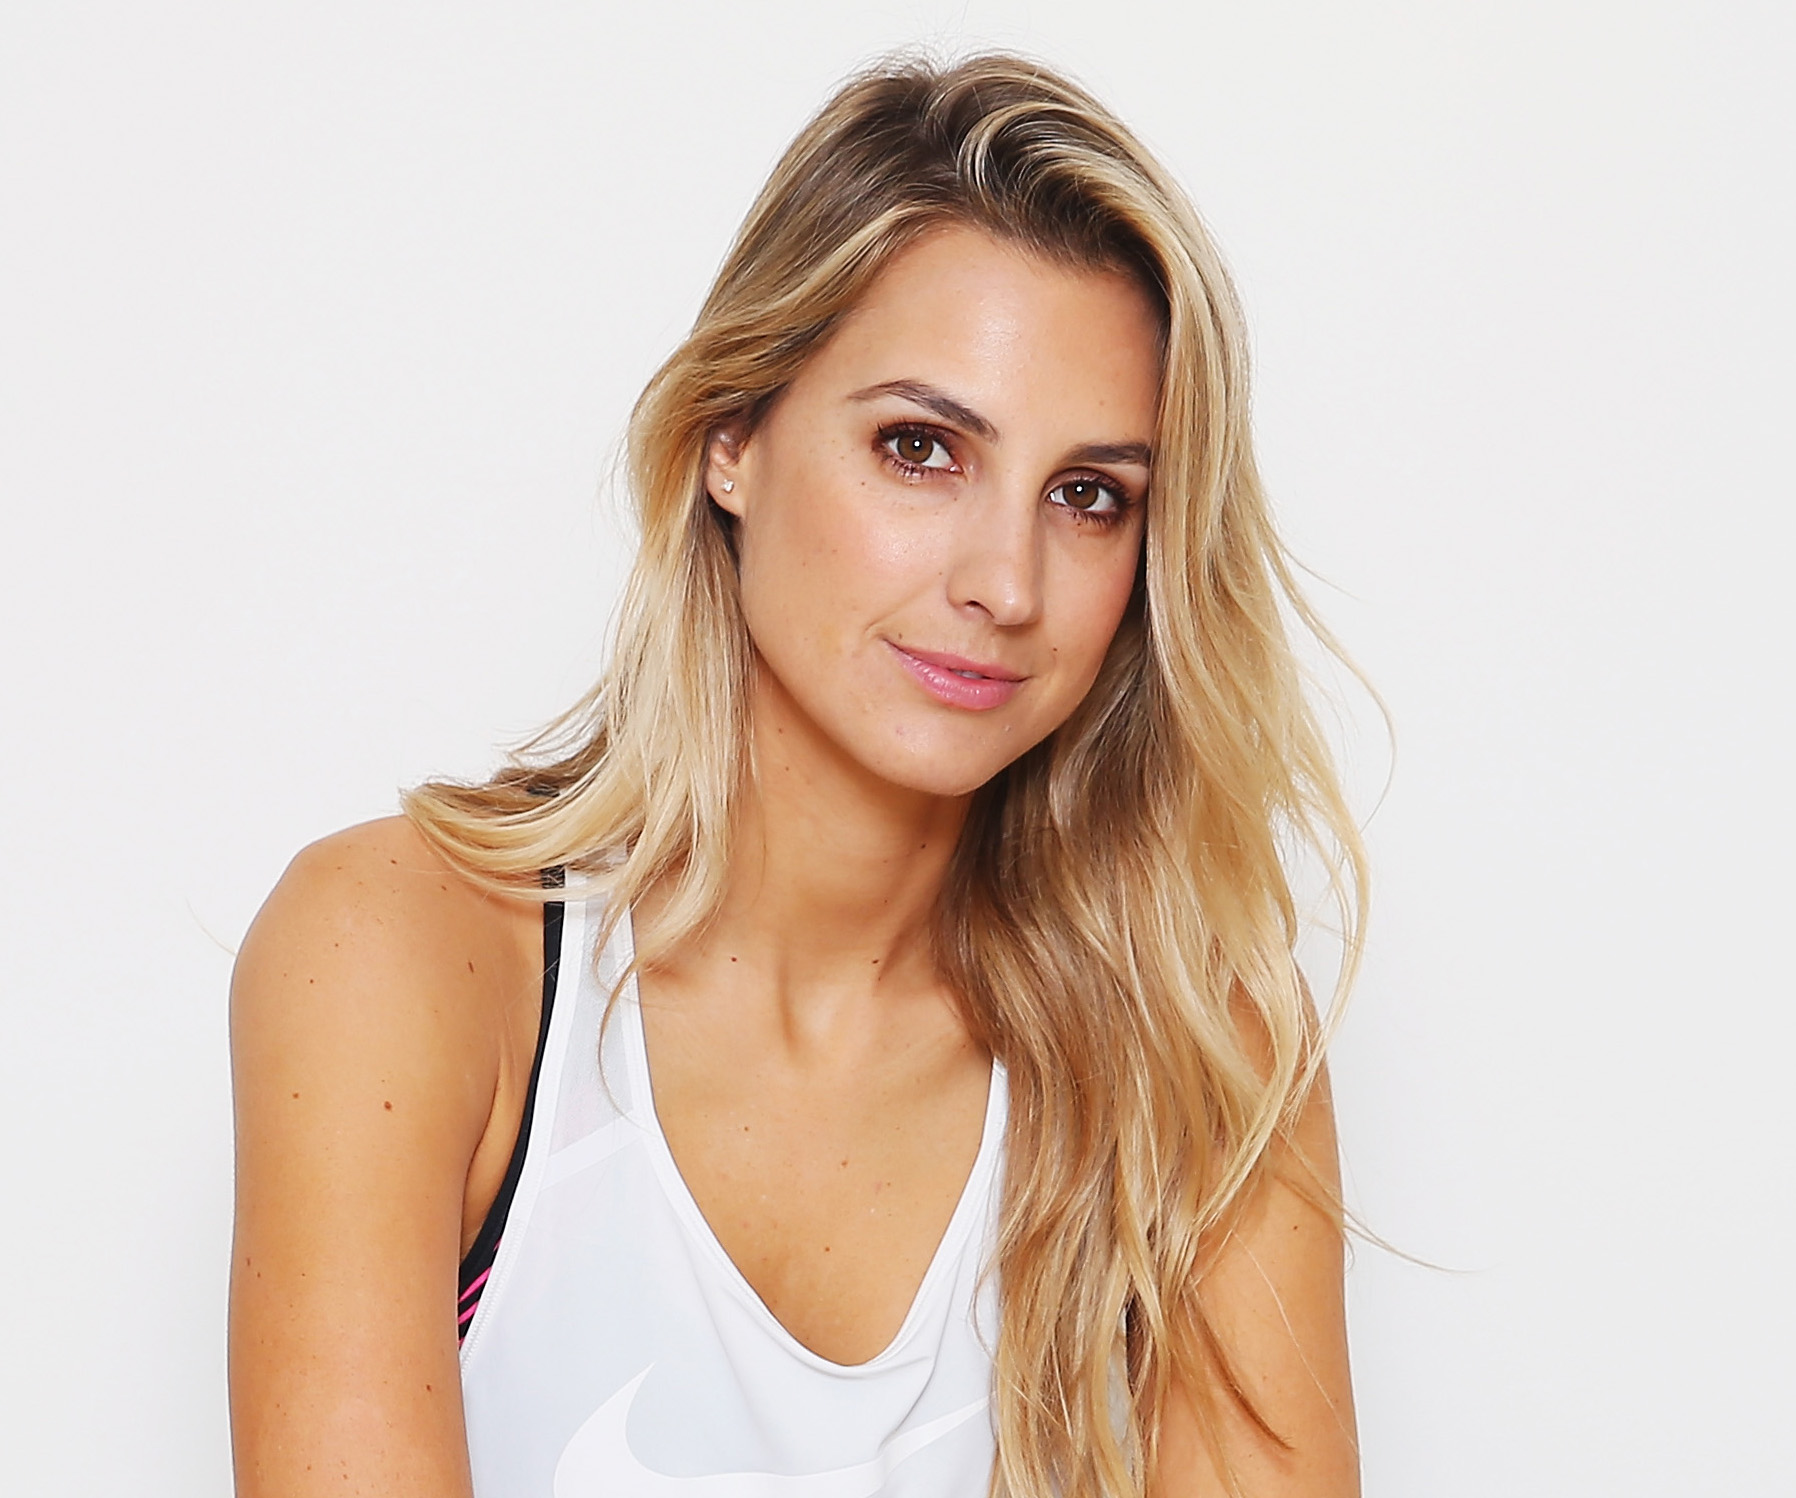 EXCLUSIVE: Aussie model Laura Dundovic reveals her secret health battle